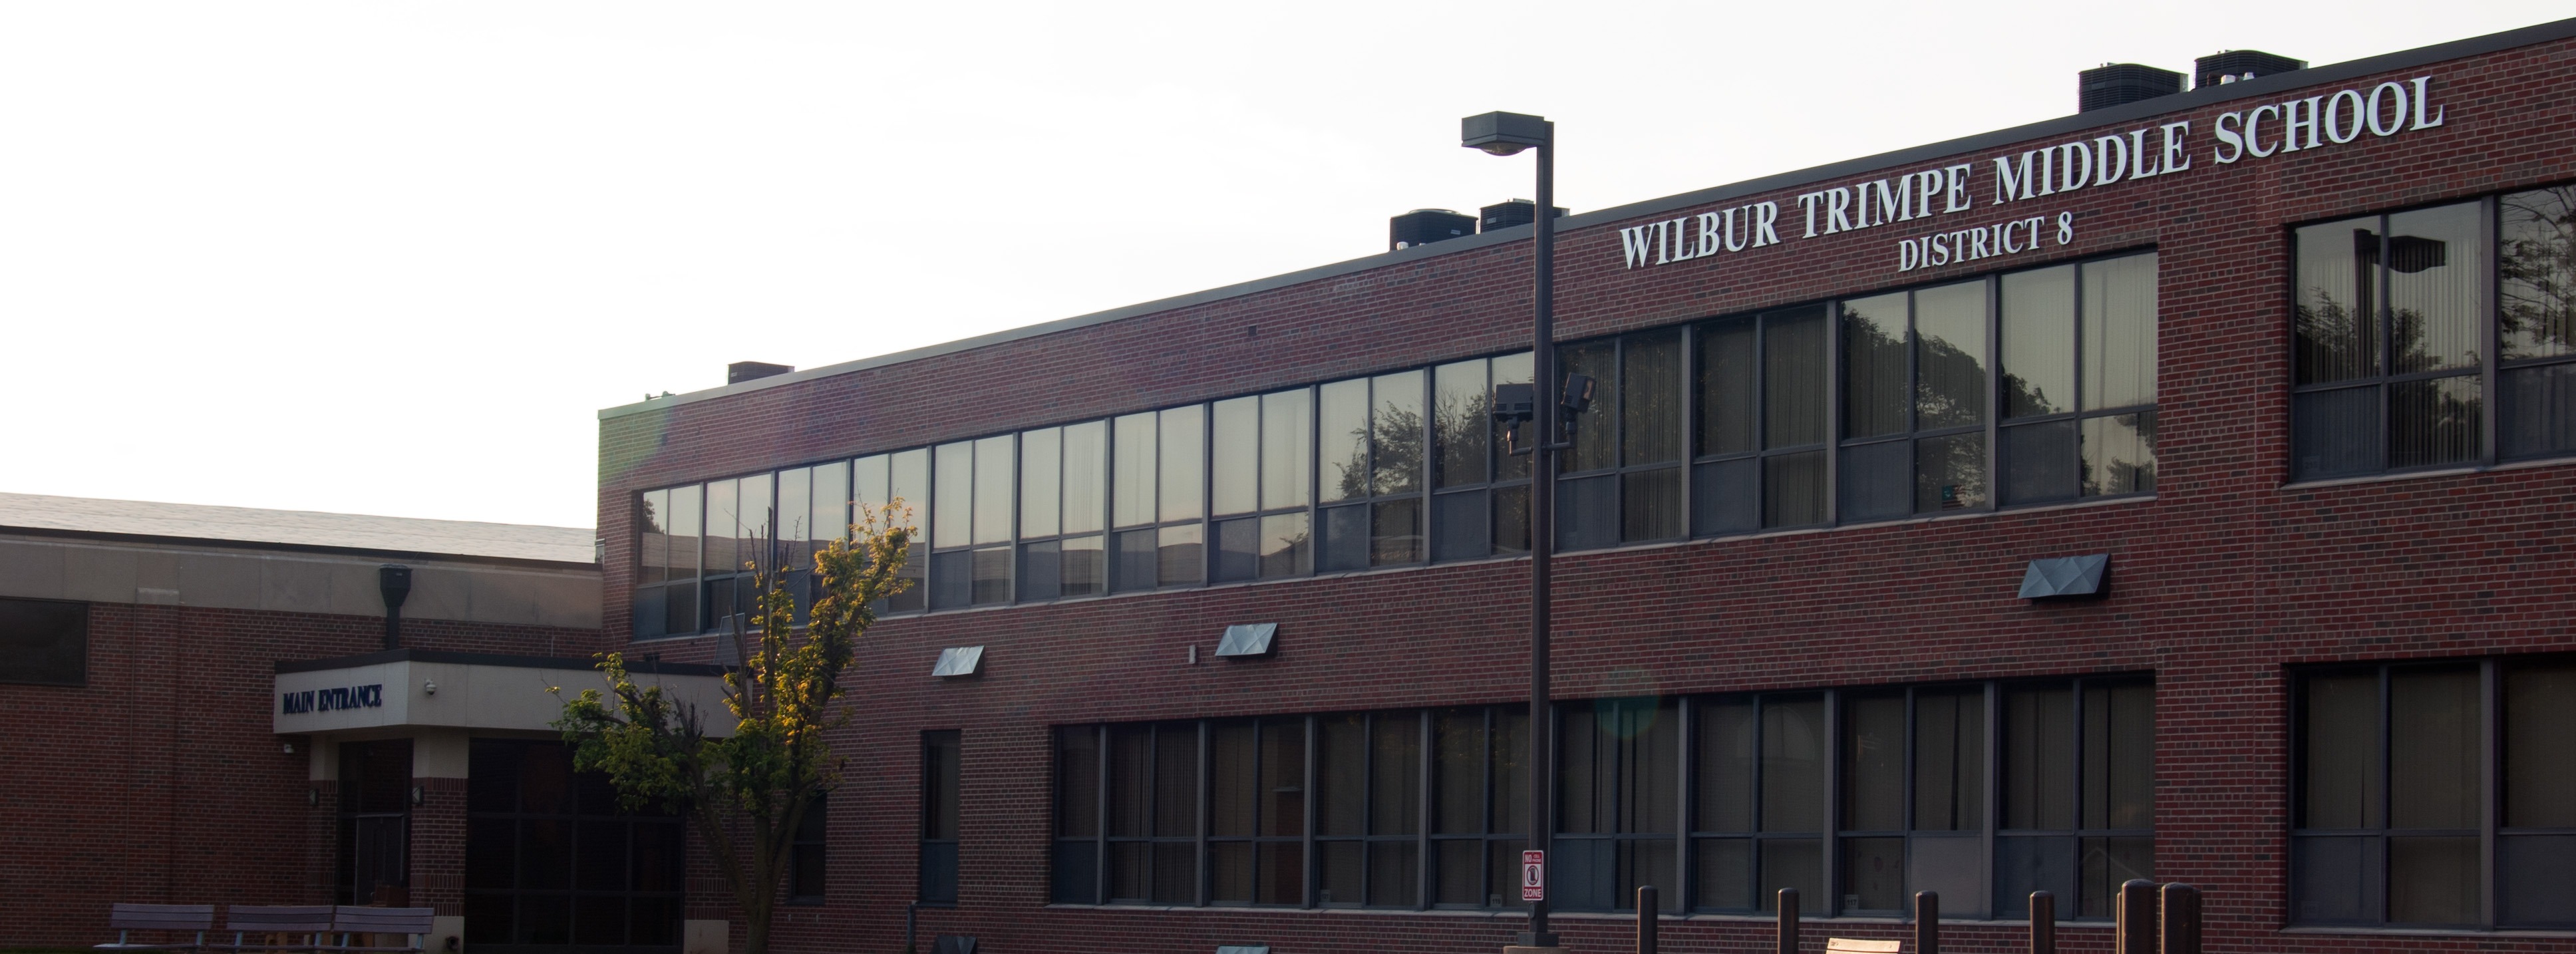 Exterior shot of Wilbur Trimpe Middle School